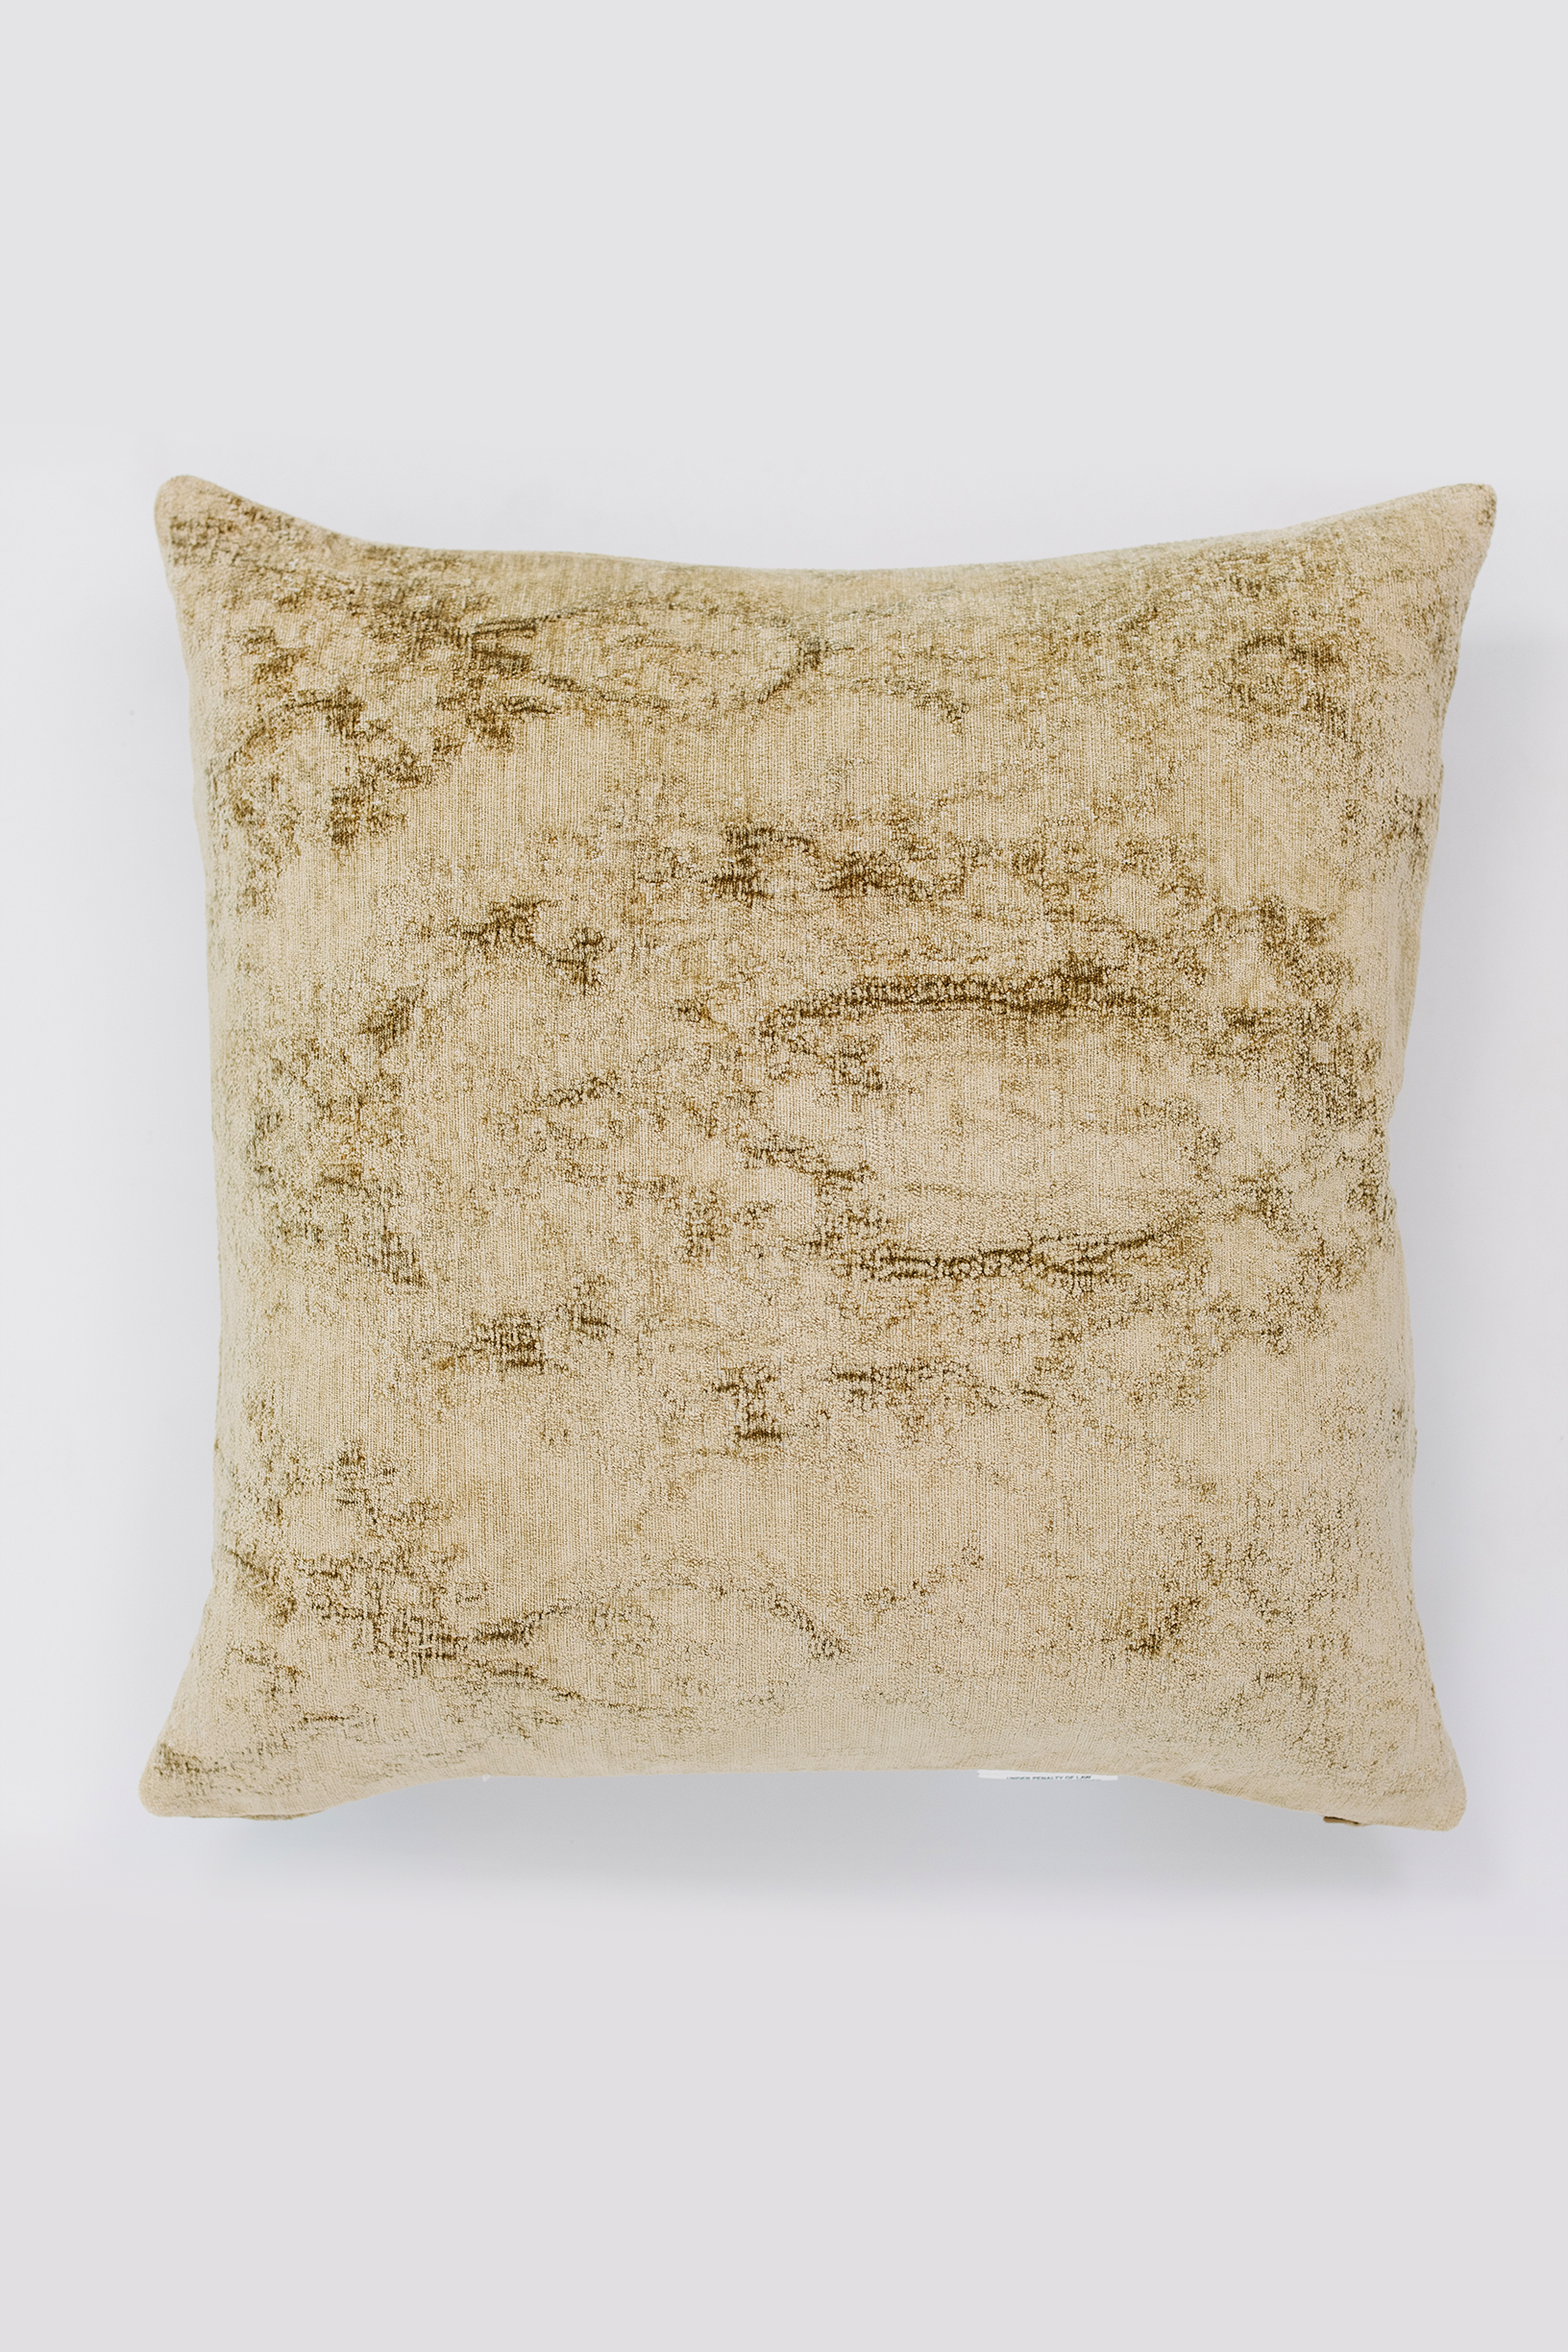 Myles Pillow - Wheat